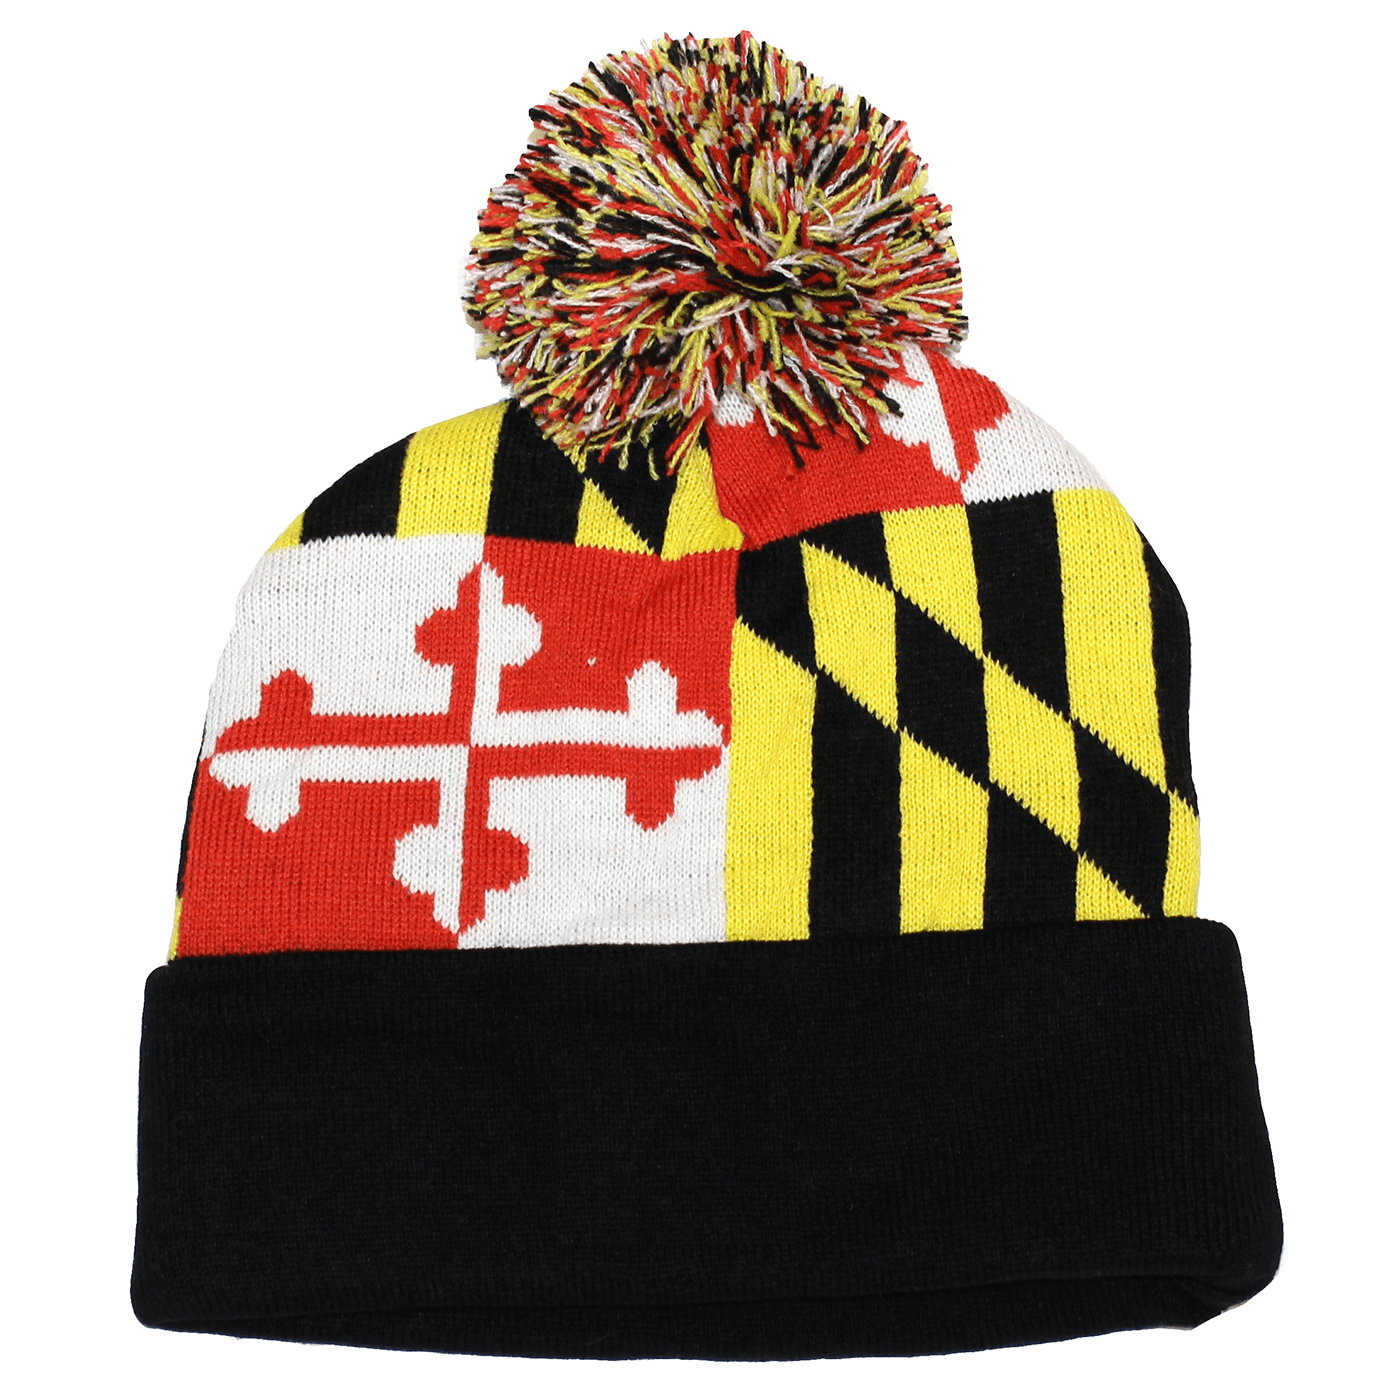 Full Maryland Flag (Black) / Knit Beanie Cap w/ Pom-Pom - Route One Apparel